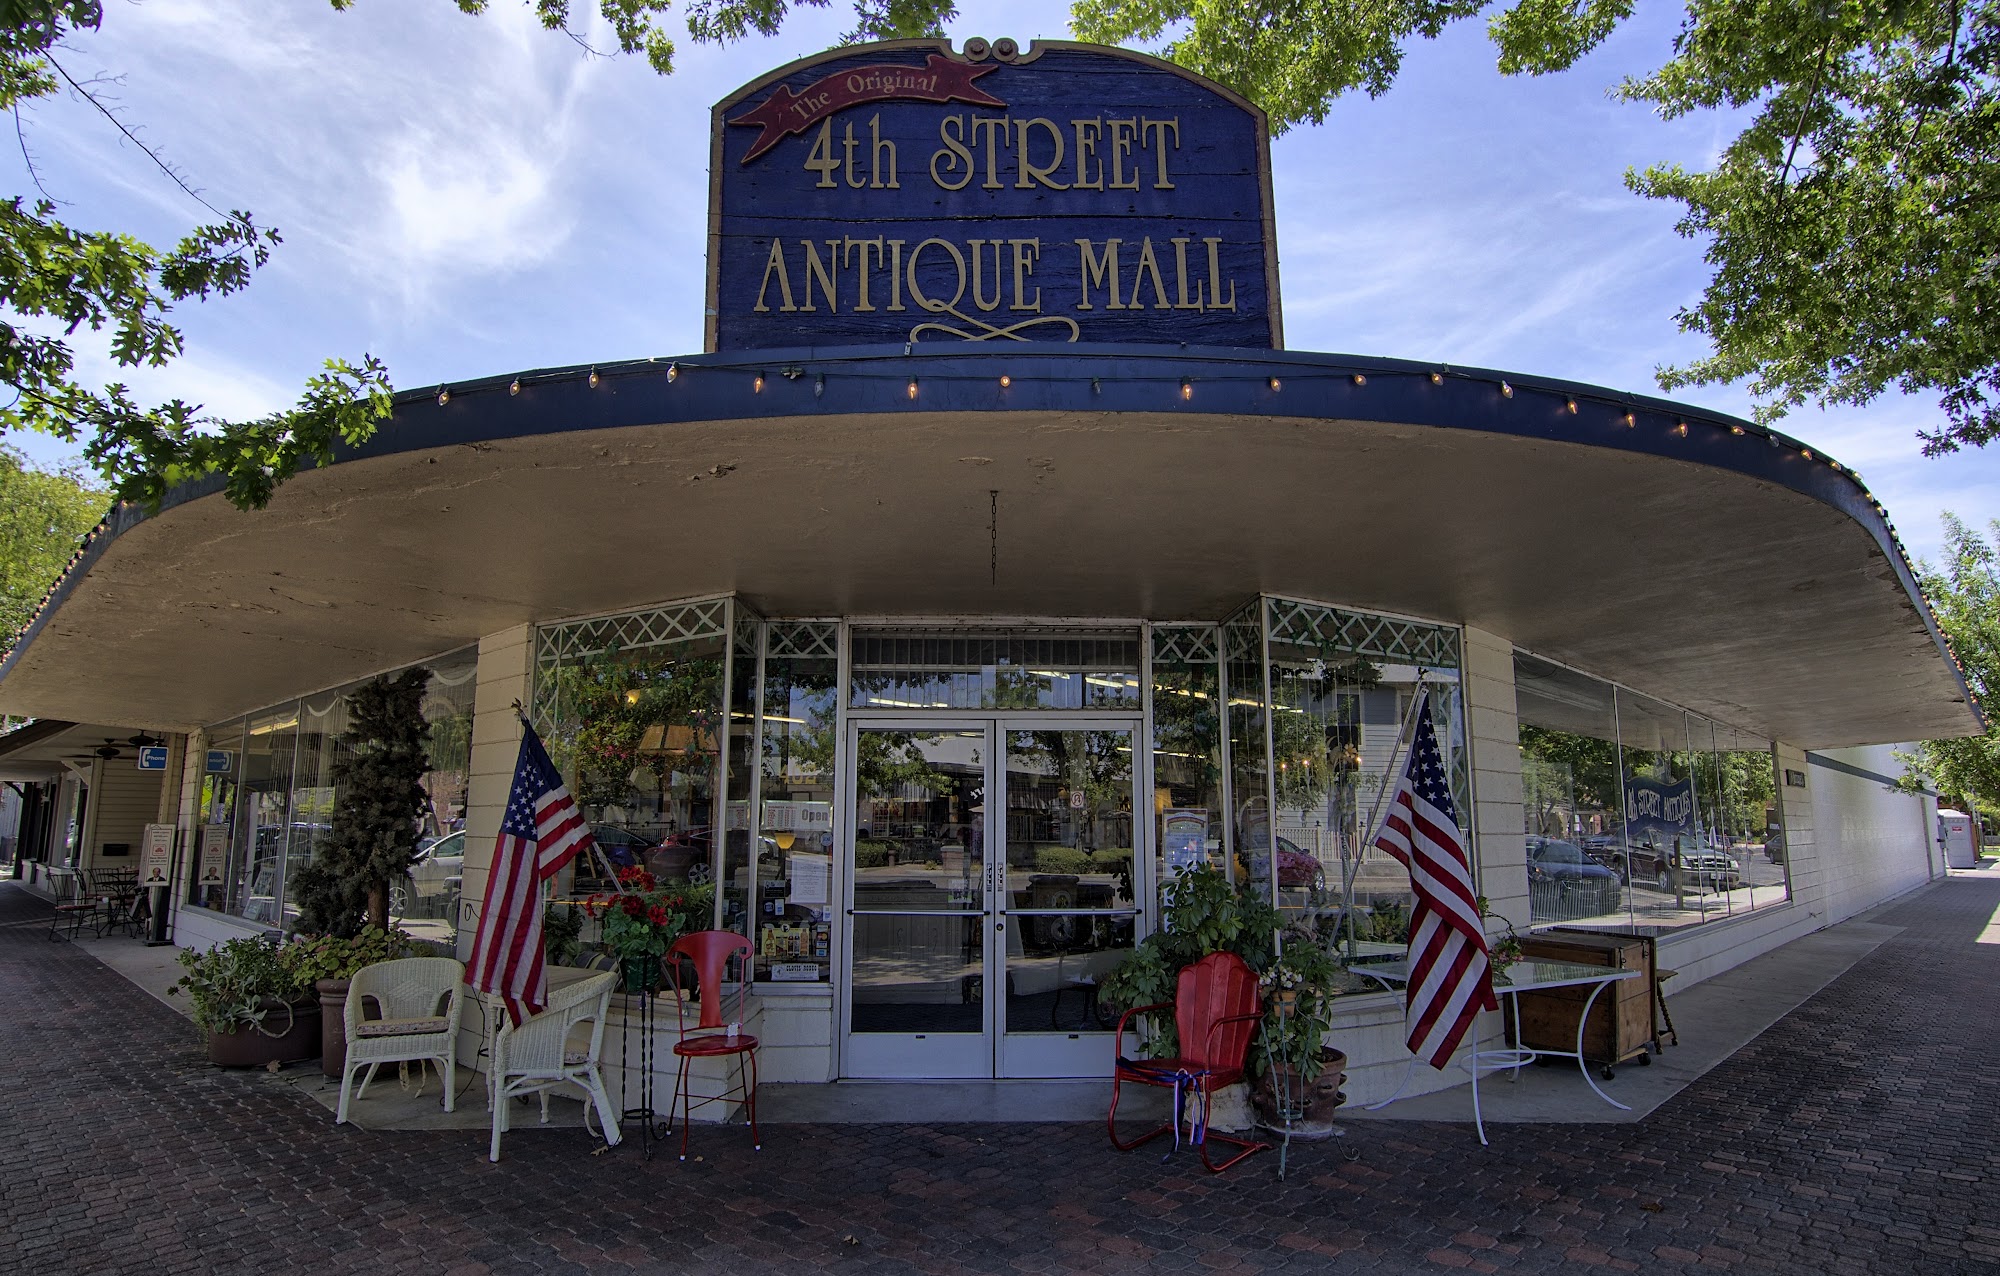 The Original 4th Street Antique Mall